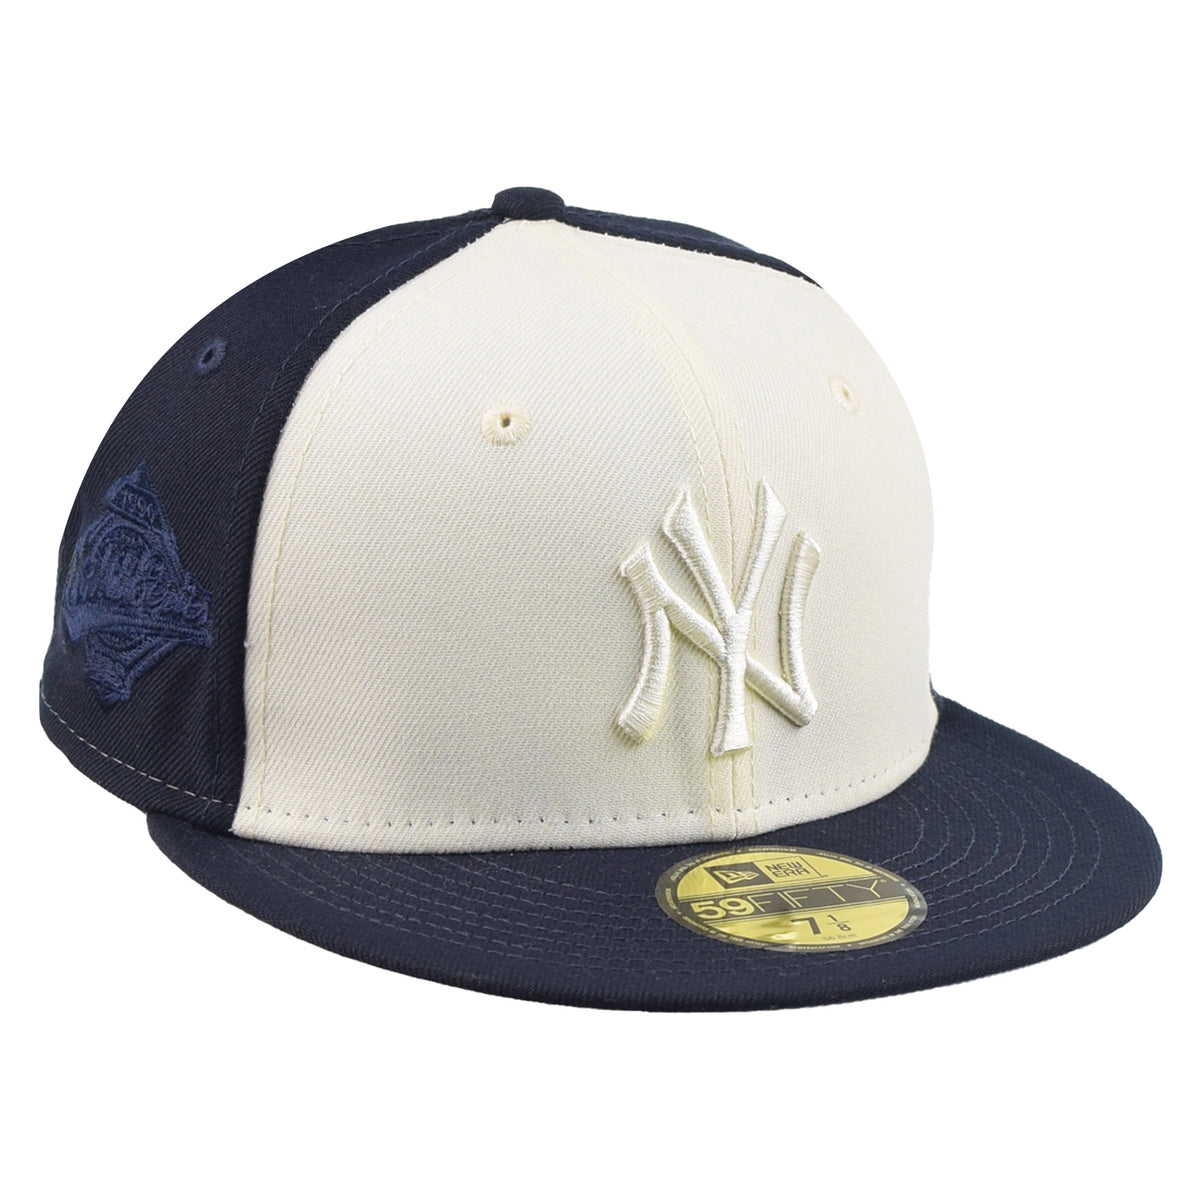 New Era New York Yankees Big Apple Stadium Edition 59Fifty Fitted Cap